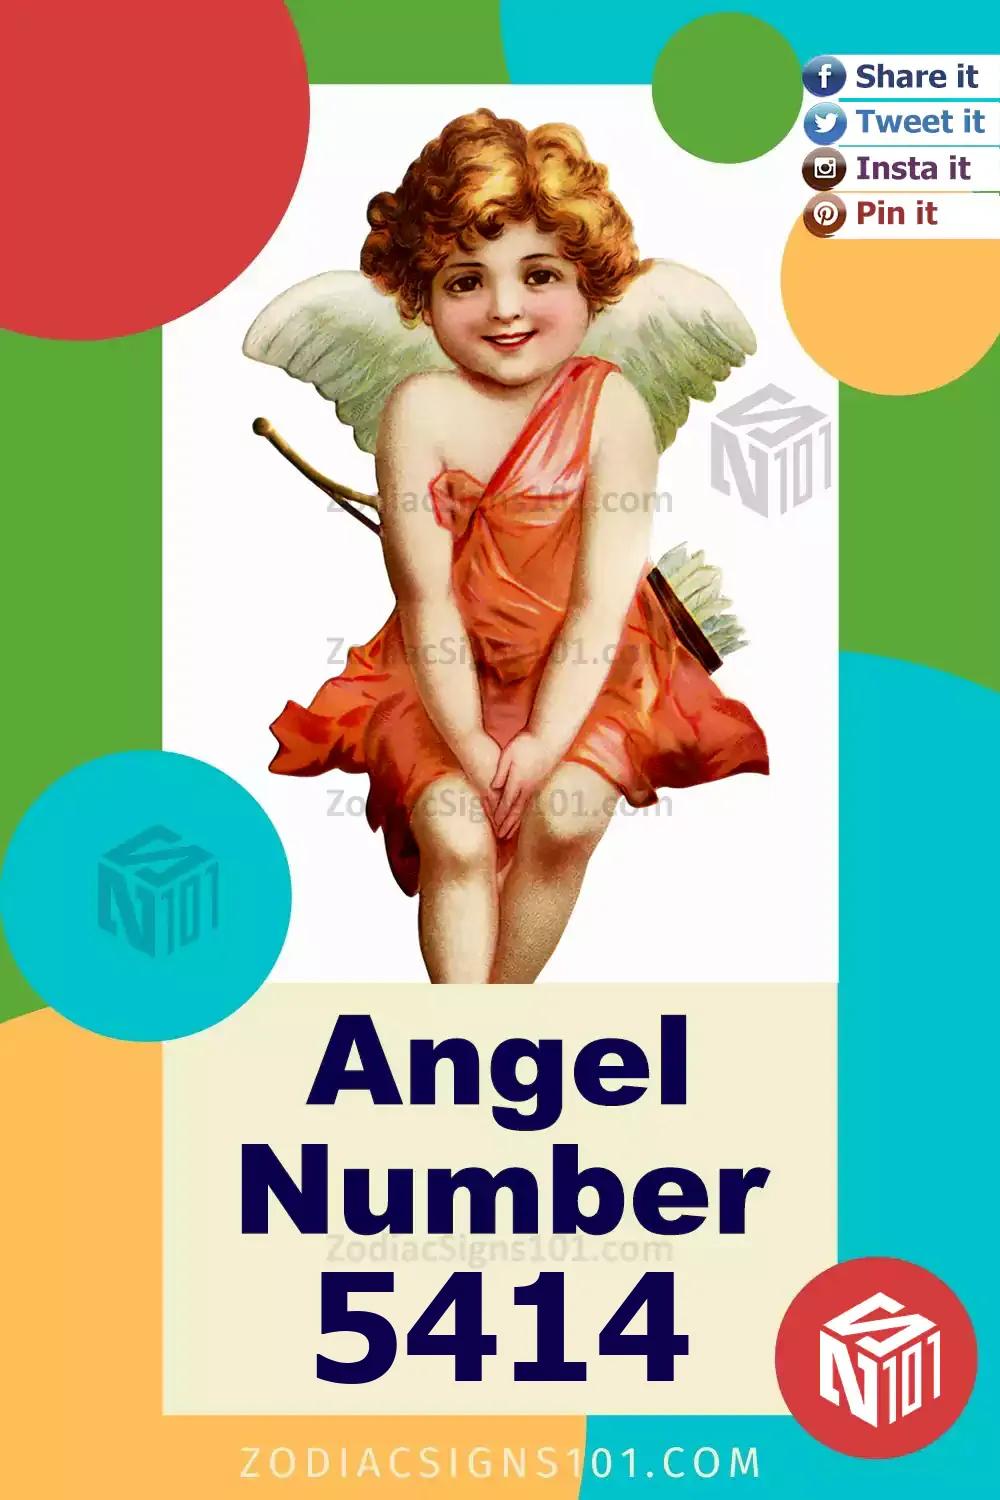 5414-Angel-Number-Meaning.jpg